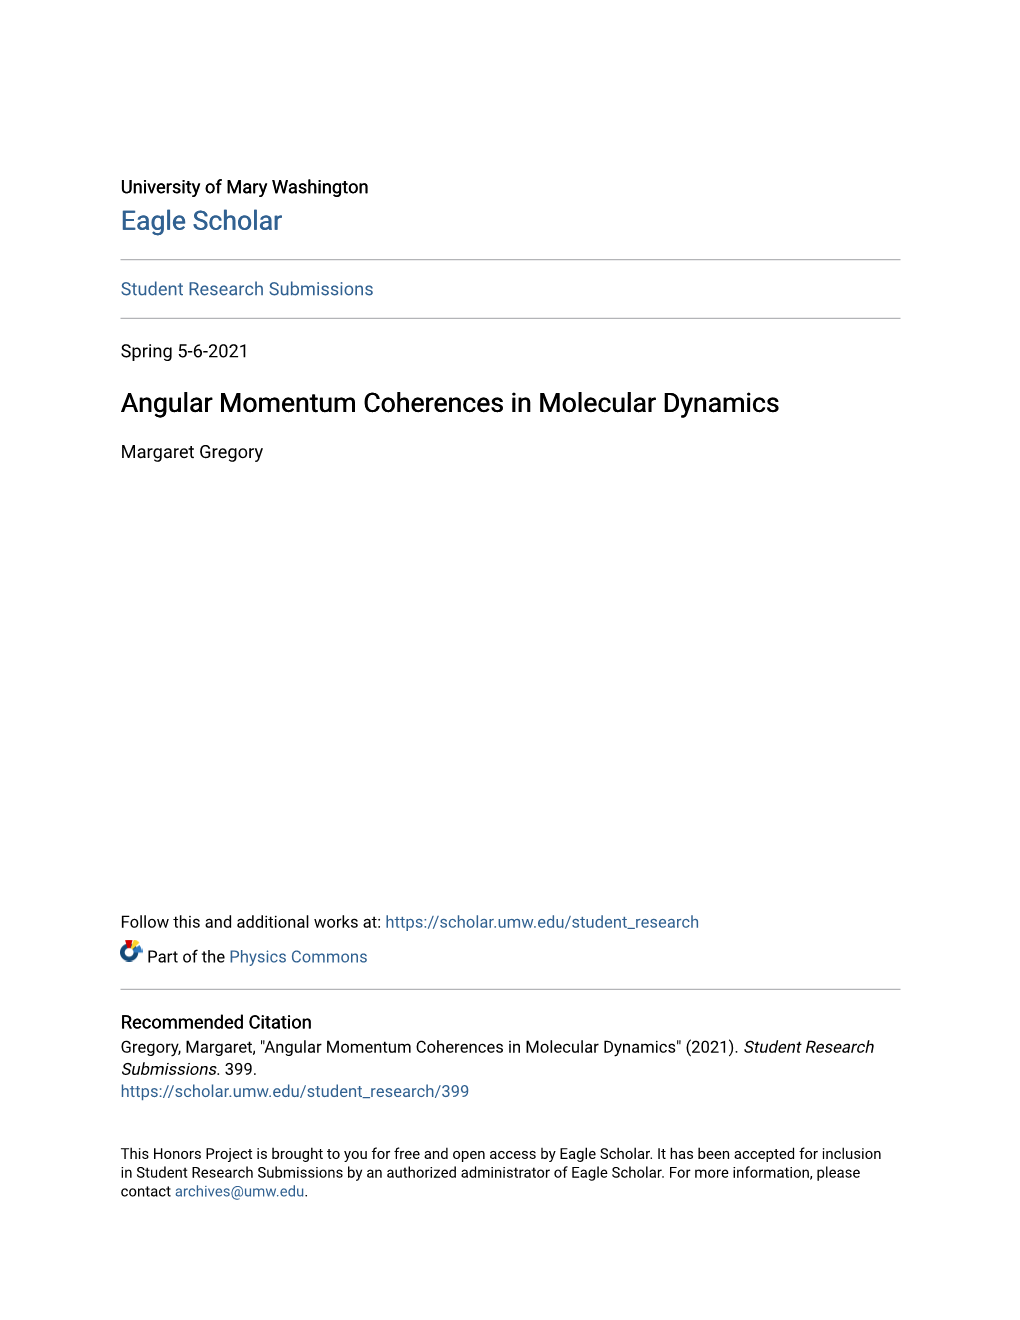 Angular Momentum Coherences in Molecular Dynamics